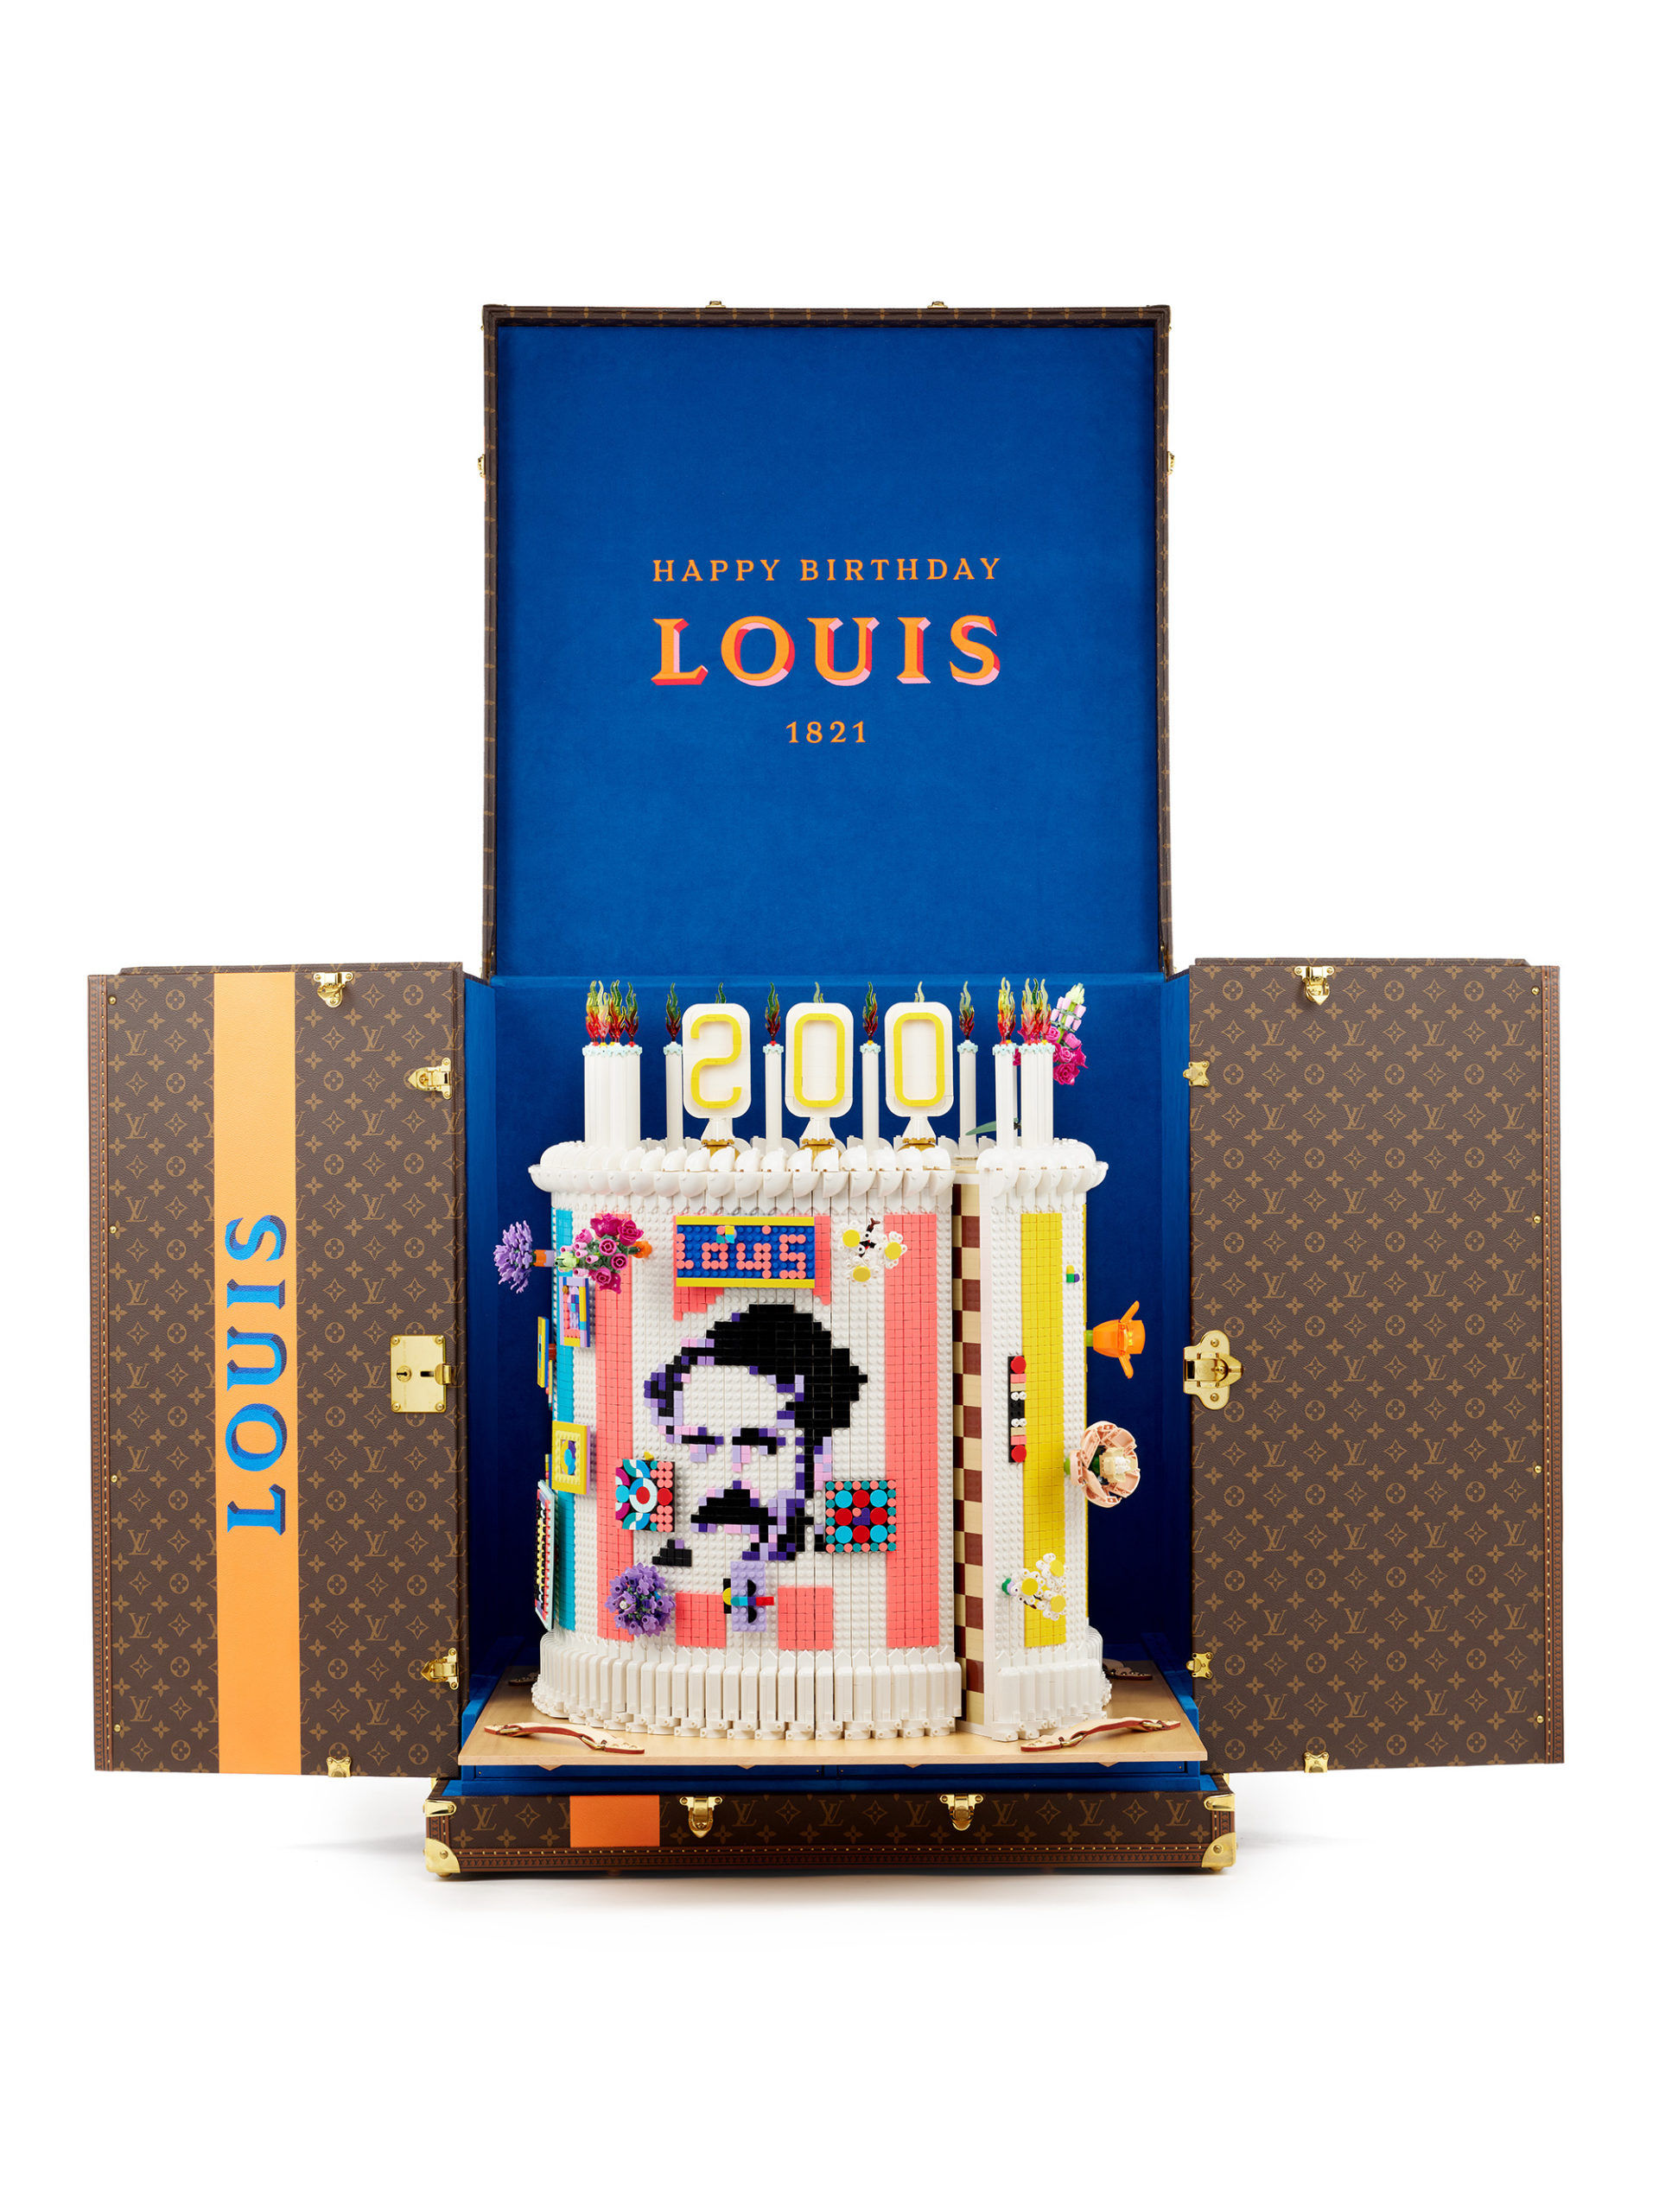 Louis Vuitton Trunk Show, 200 Trunks 200, Visionaries